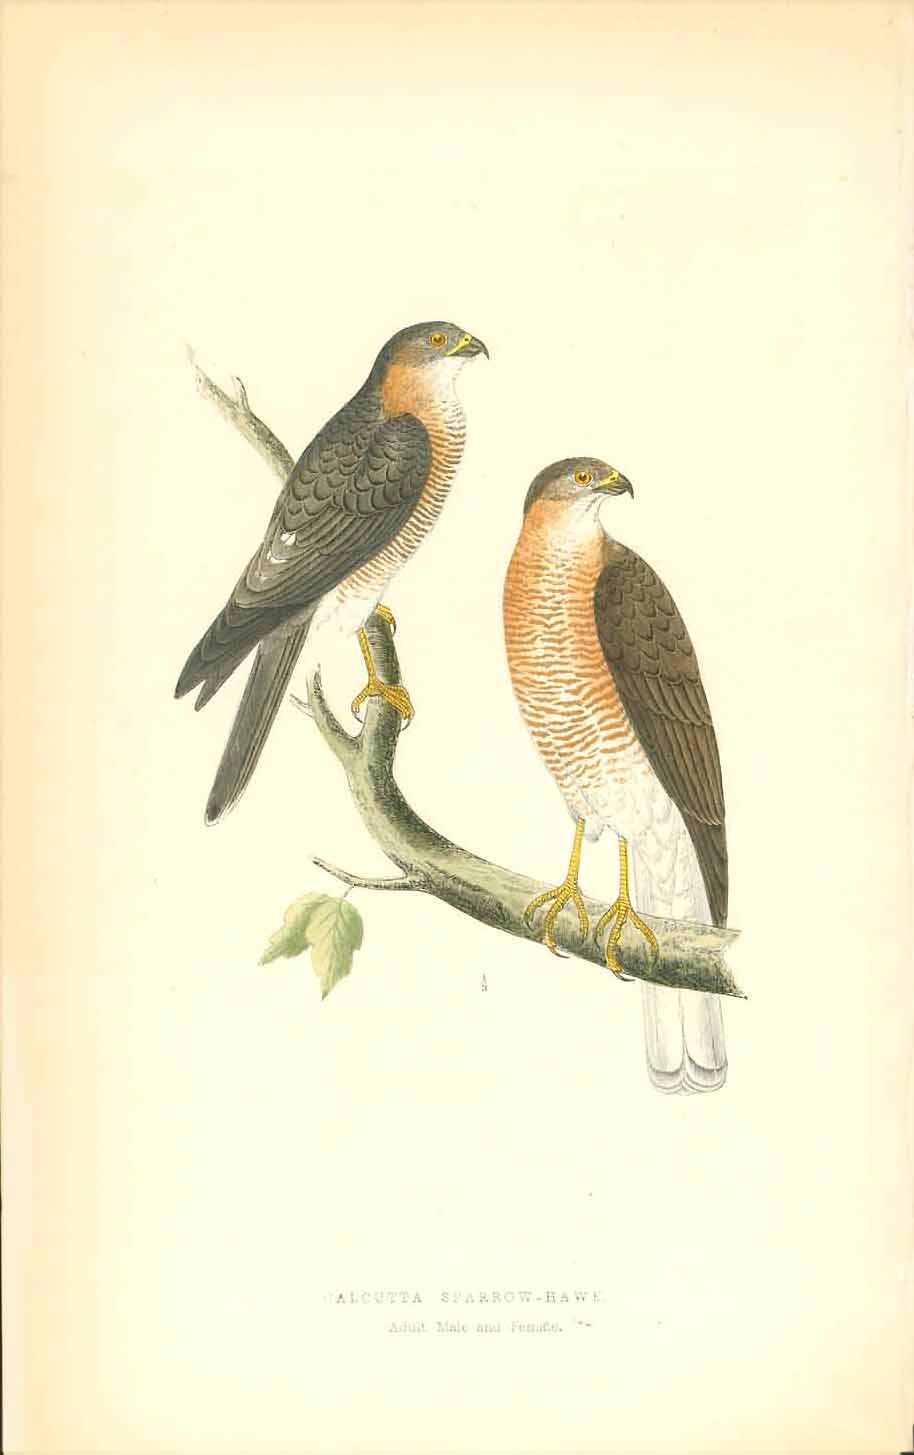  "Calcutta Sparrow Hawk"  Lithograph for C.H. Bree M.D. 1863. Original hand coloring. Light natural age toning. Vertical crease in right margin.  Original antique print 